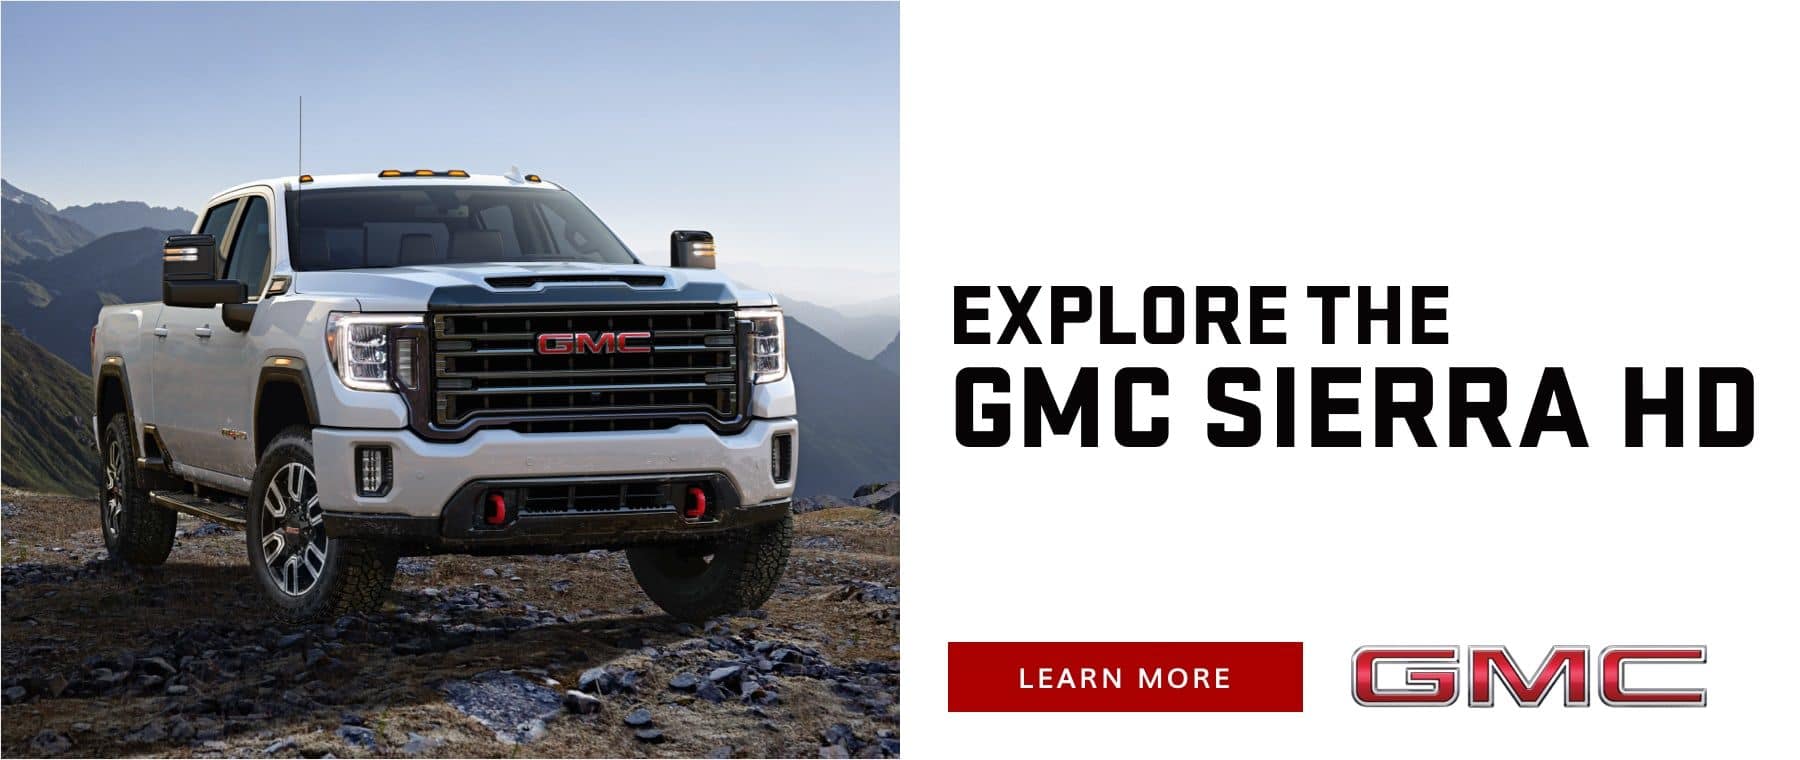 Explore the GMC Sierra HD